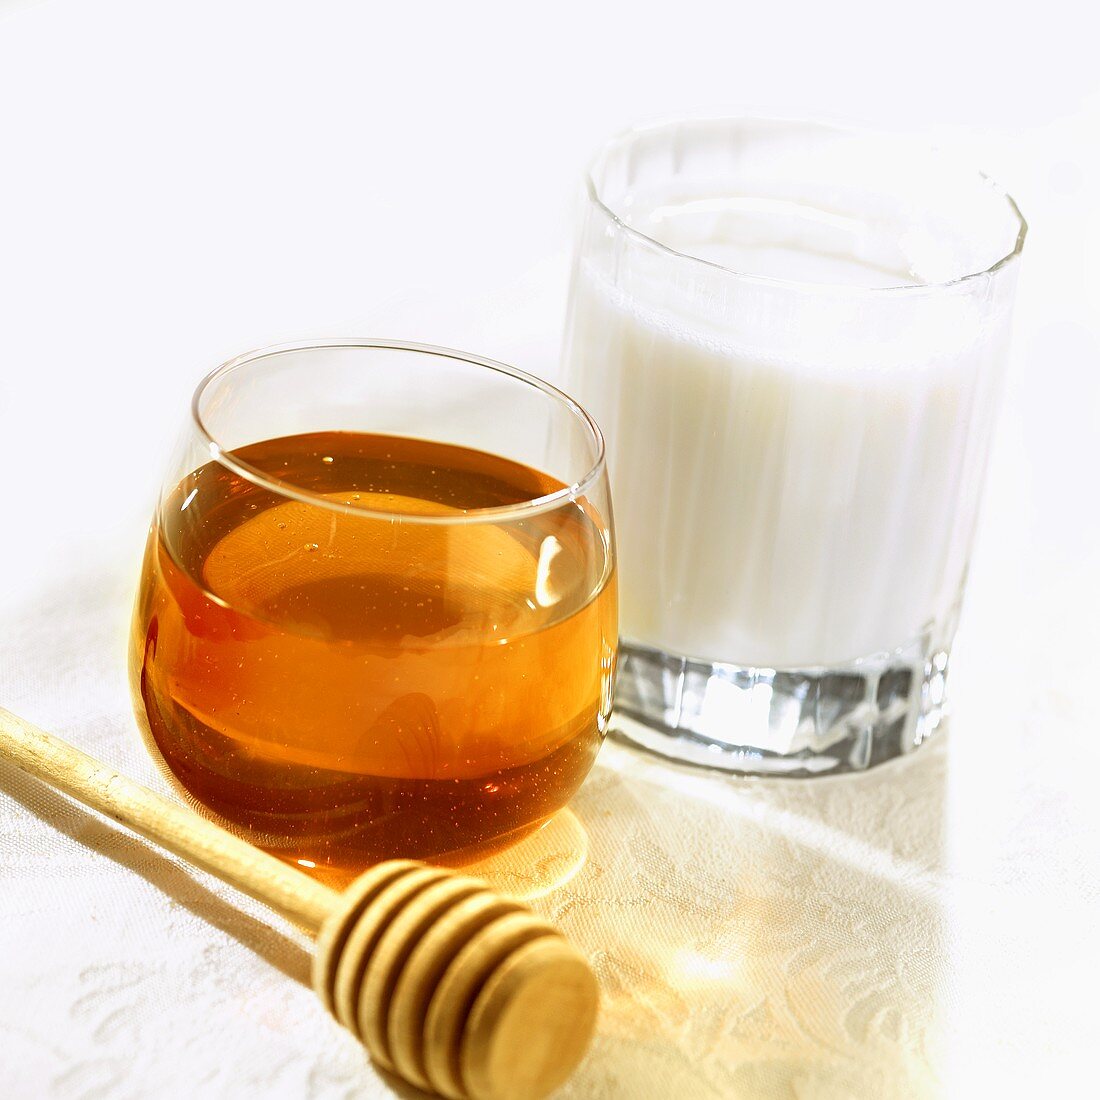 Glass of honey, honey dipper and glass of milk